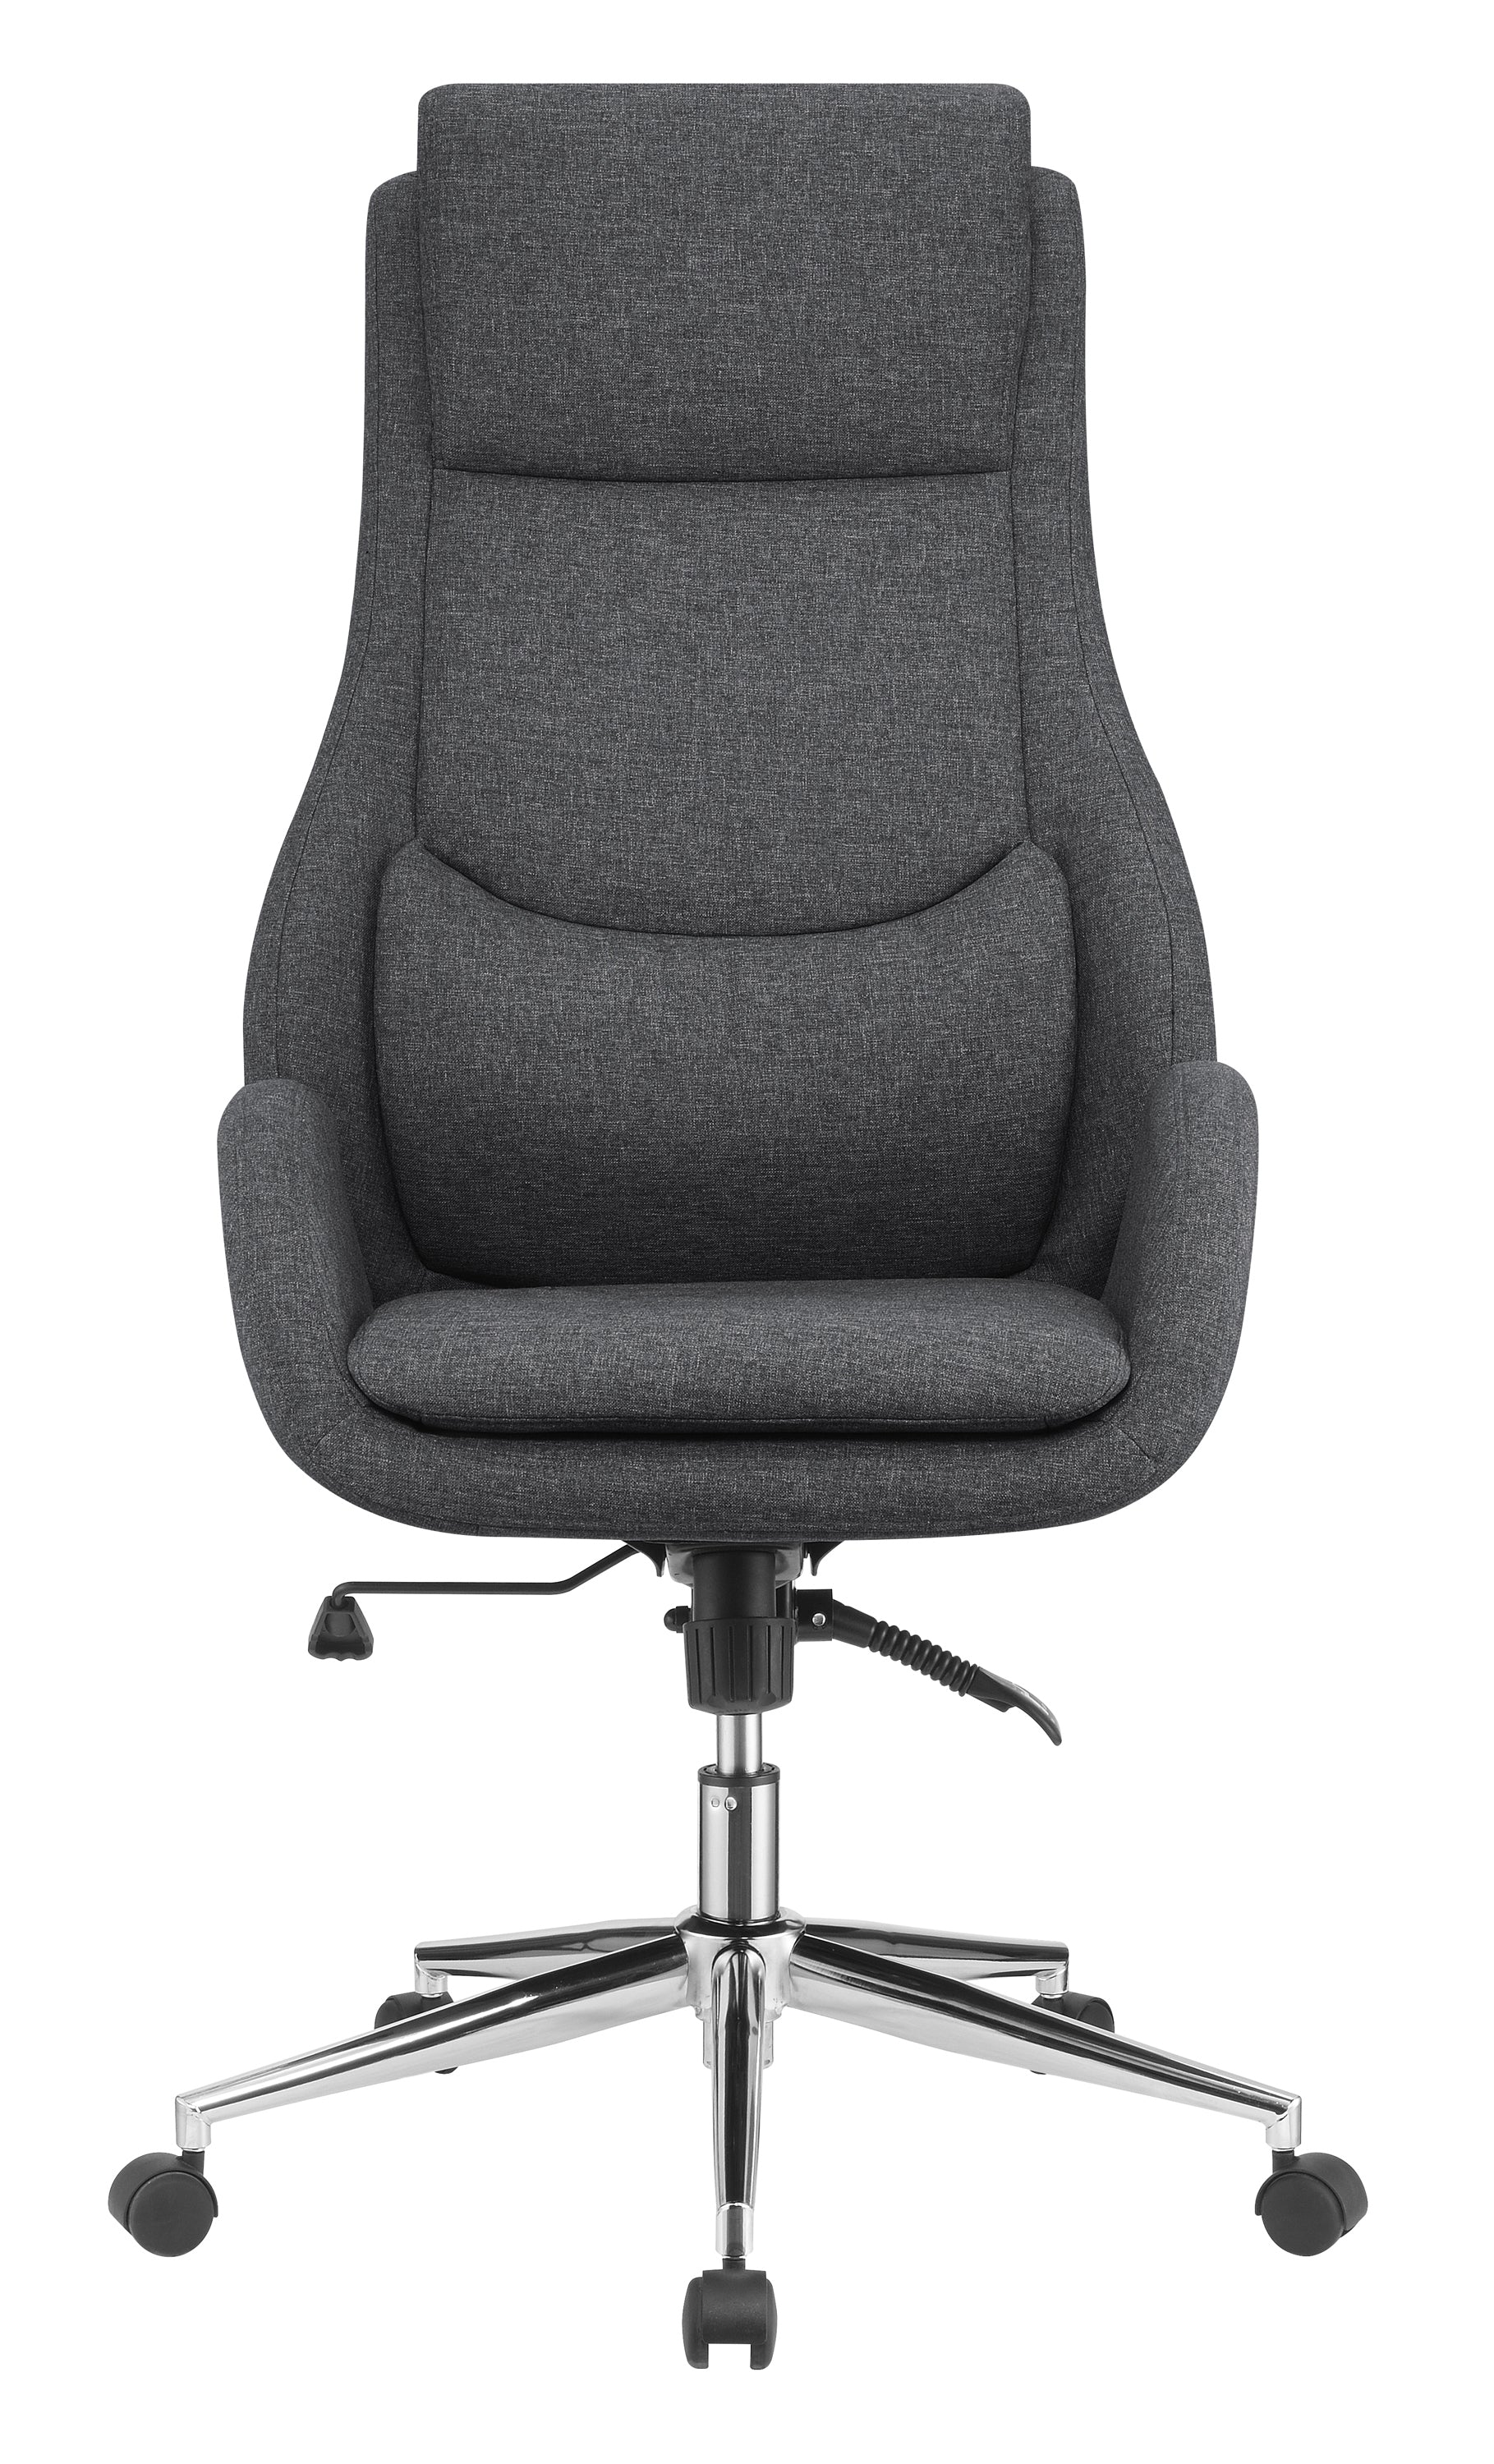 Chrome & Fabric Office Chair